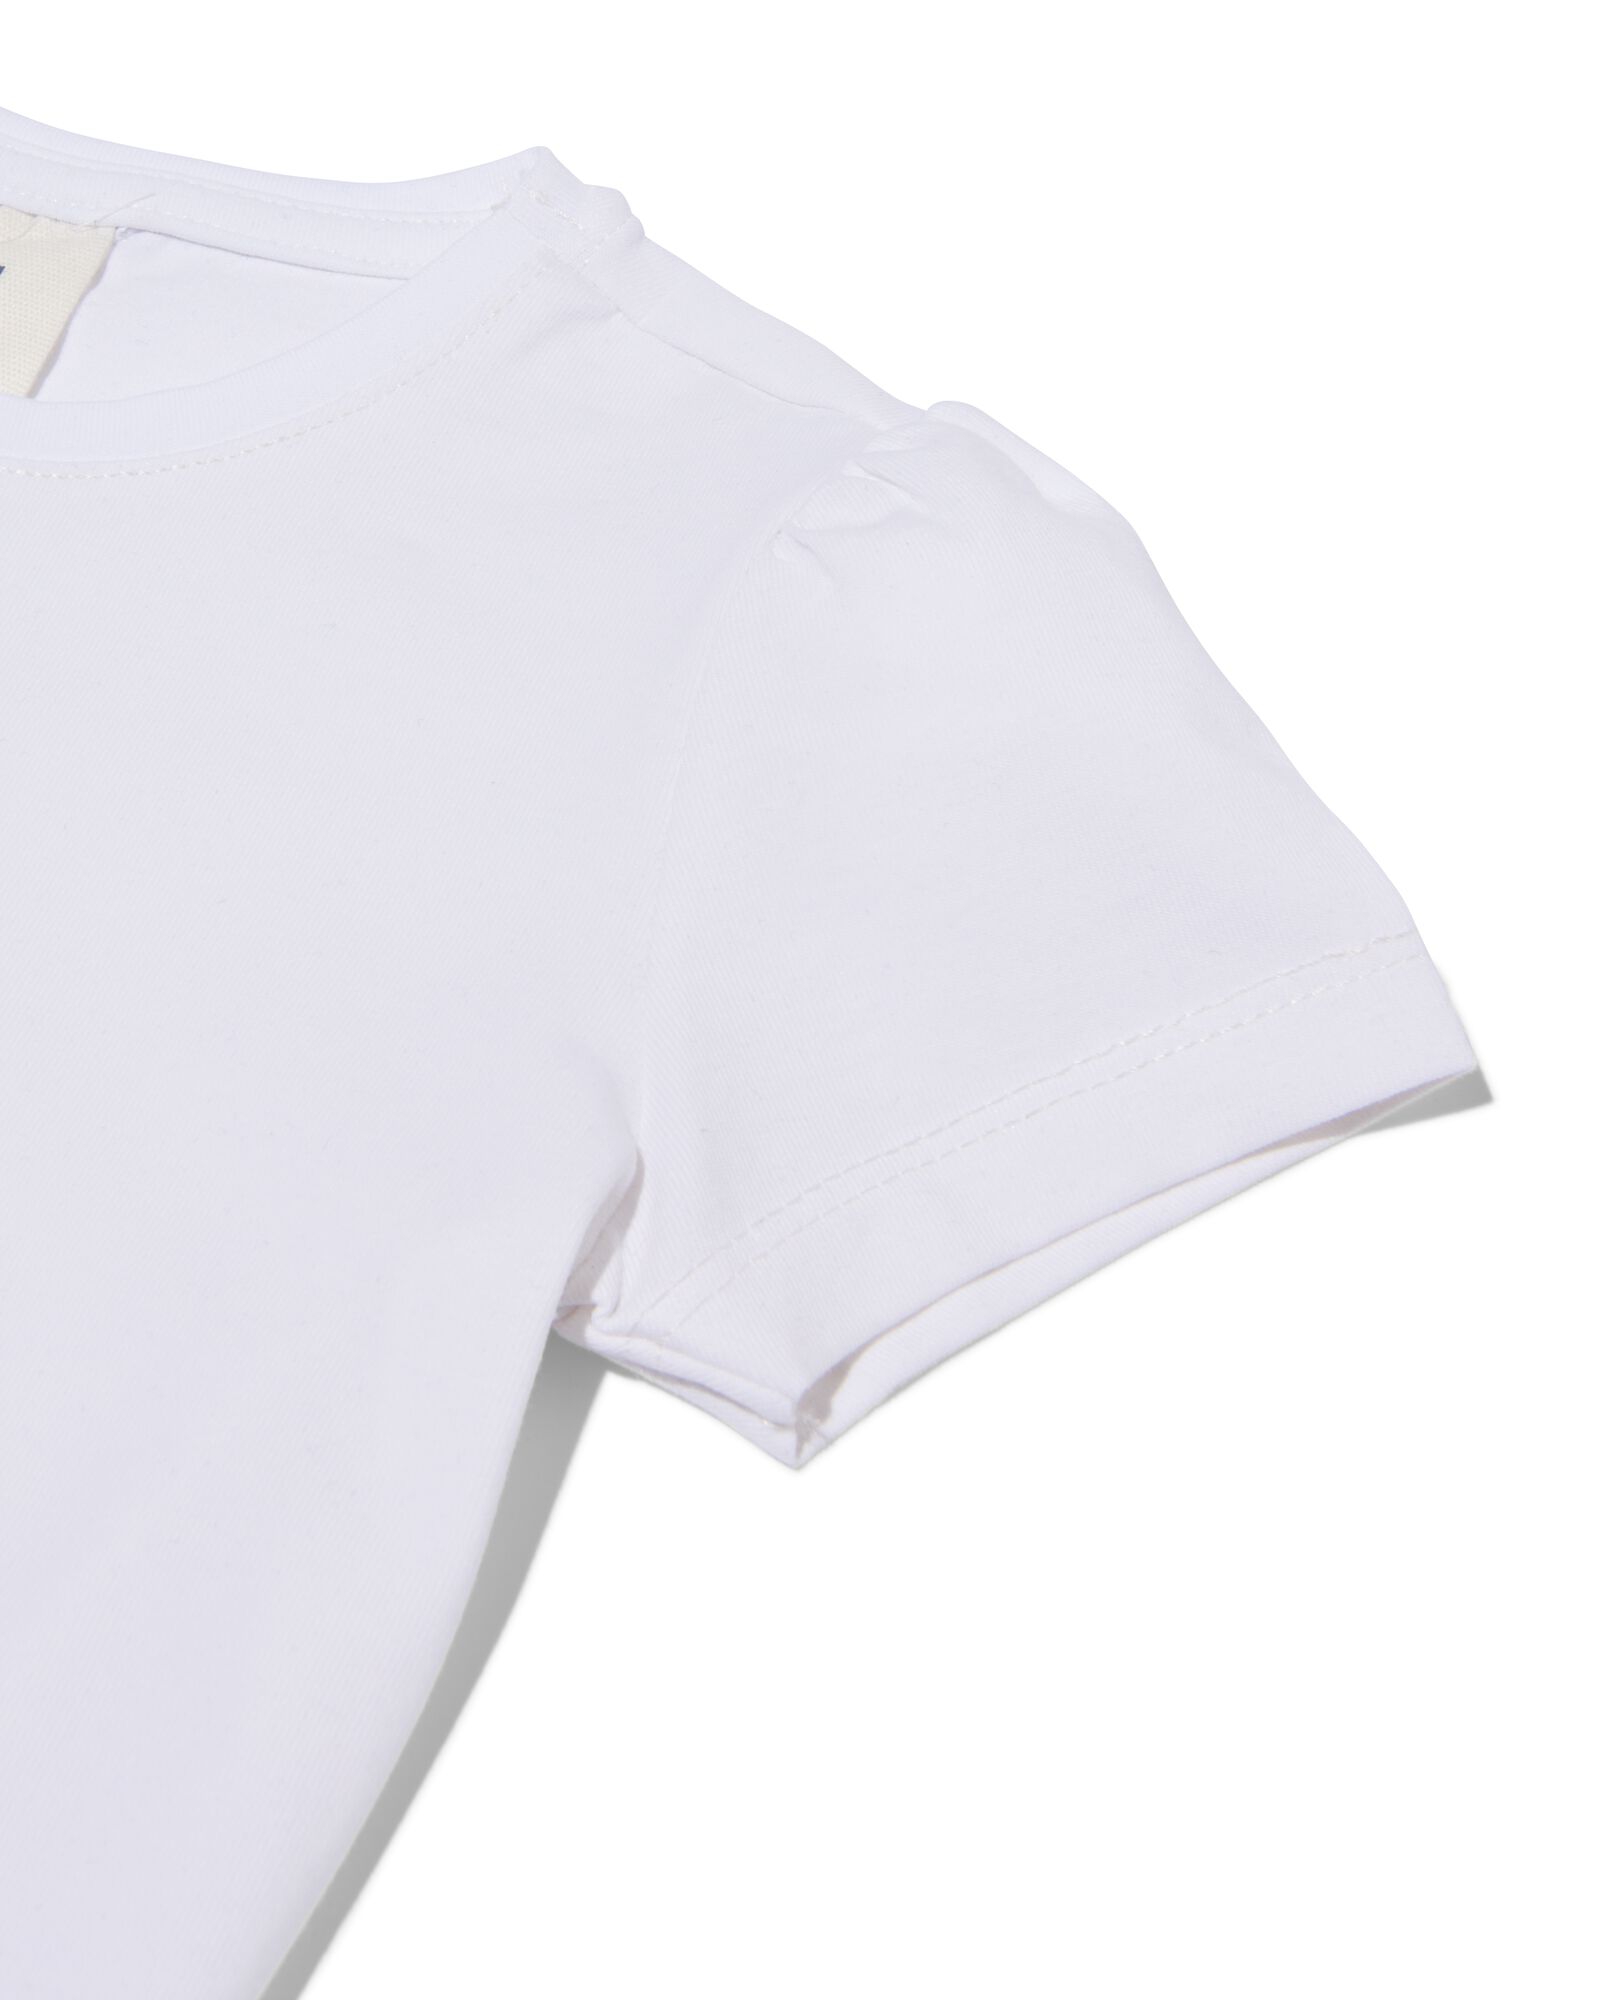 2 t-shirts enfant blanc 86/92 - 30843930 - HEMA